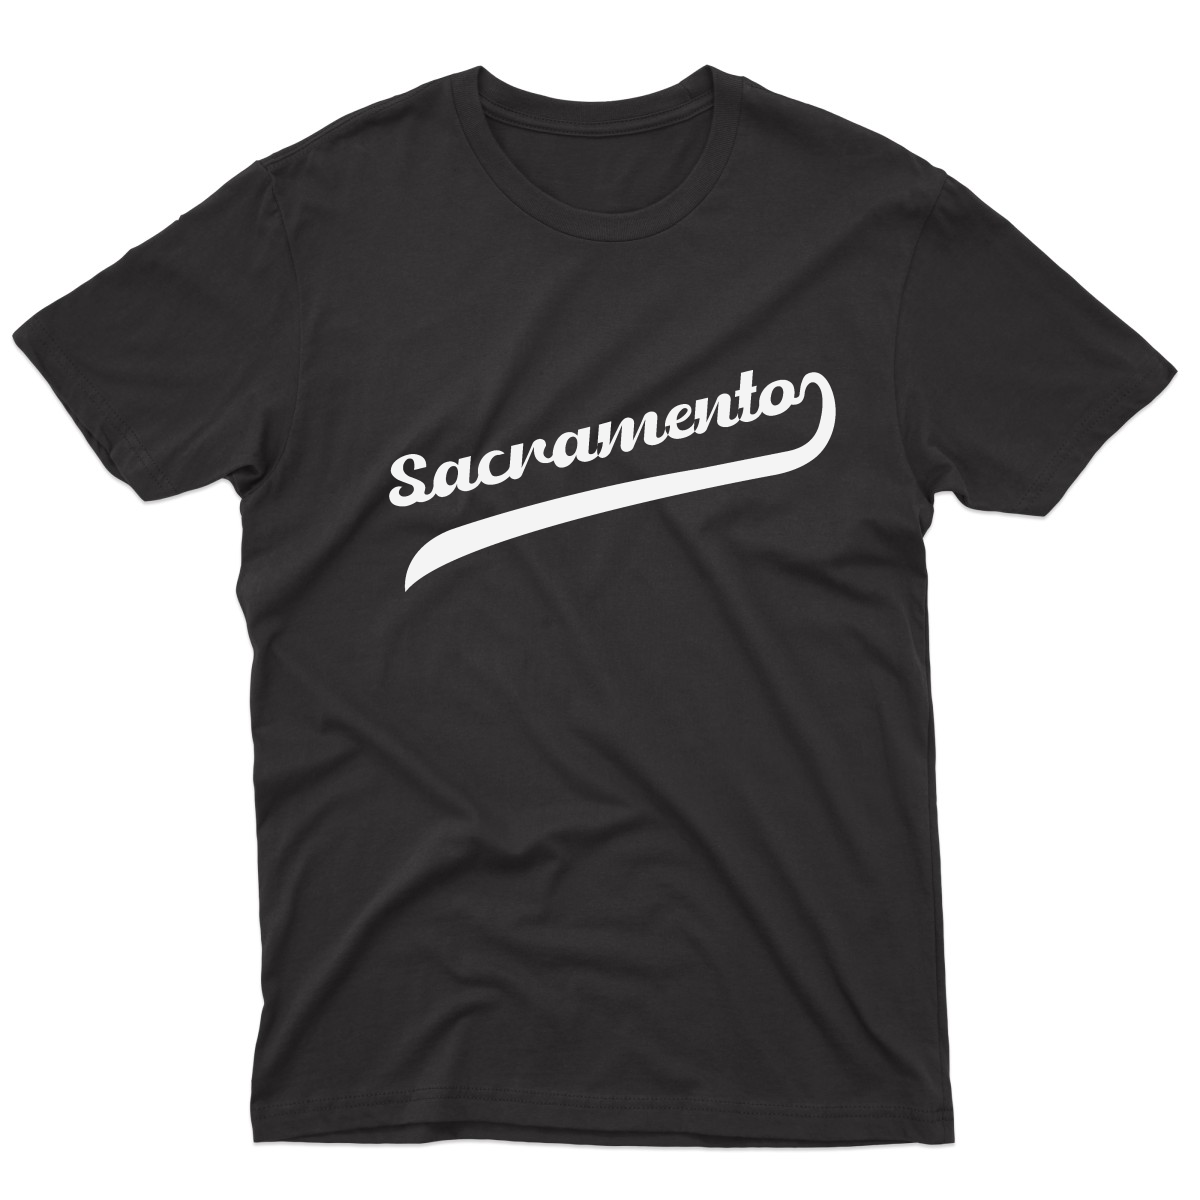 Sacramento Men's T-shirt | Black